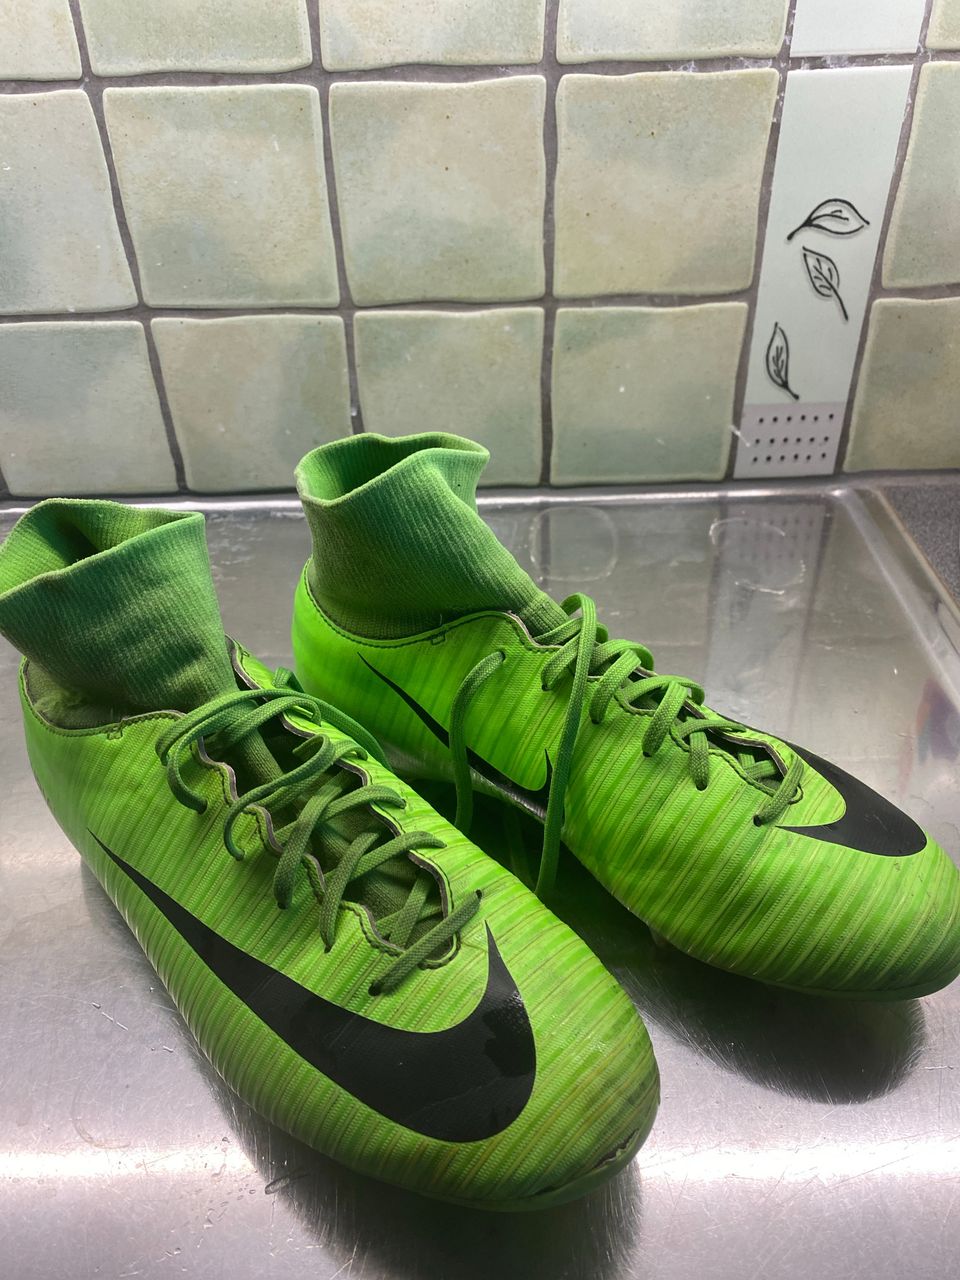 Nike jalkapallo kengät